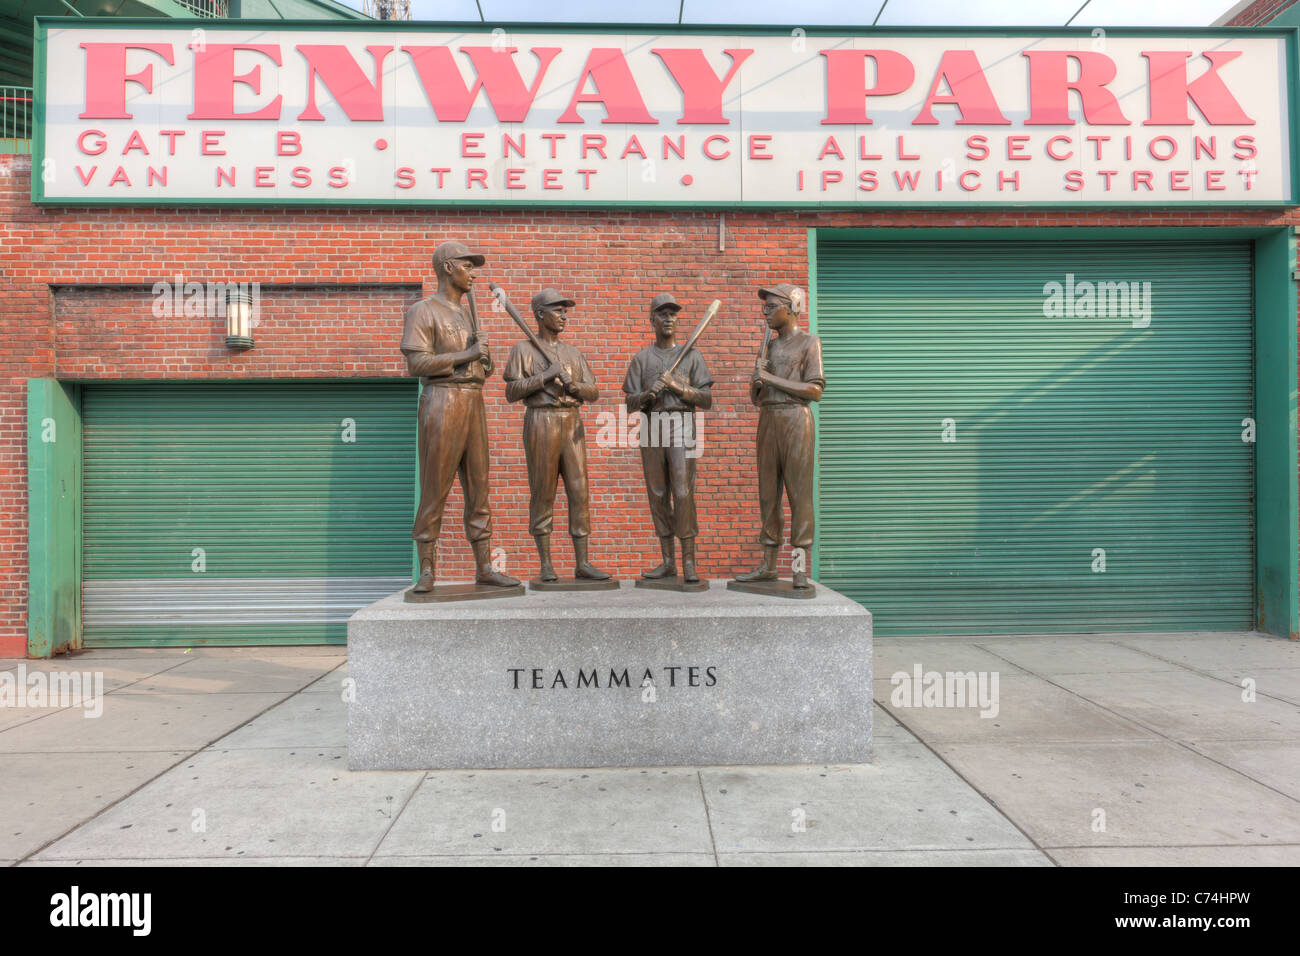 'Teammates' statue outside Gate B at Fenway Park on Van Ness Street in Boston, Massachusetts. Stock Photo